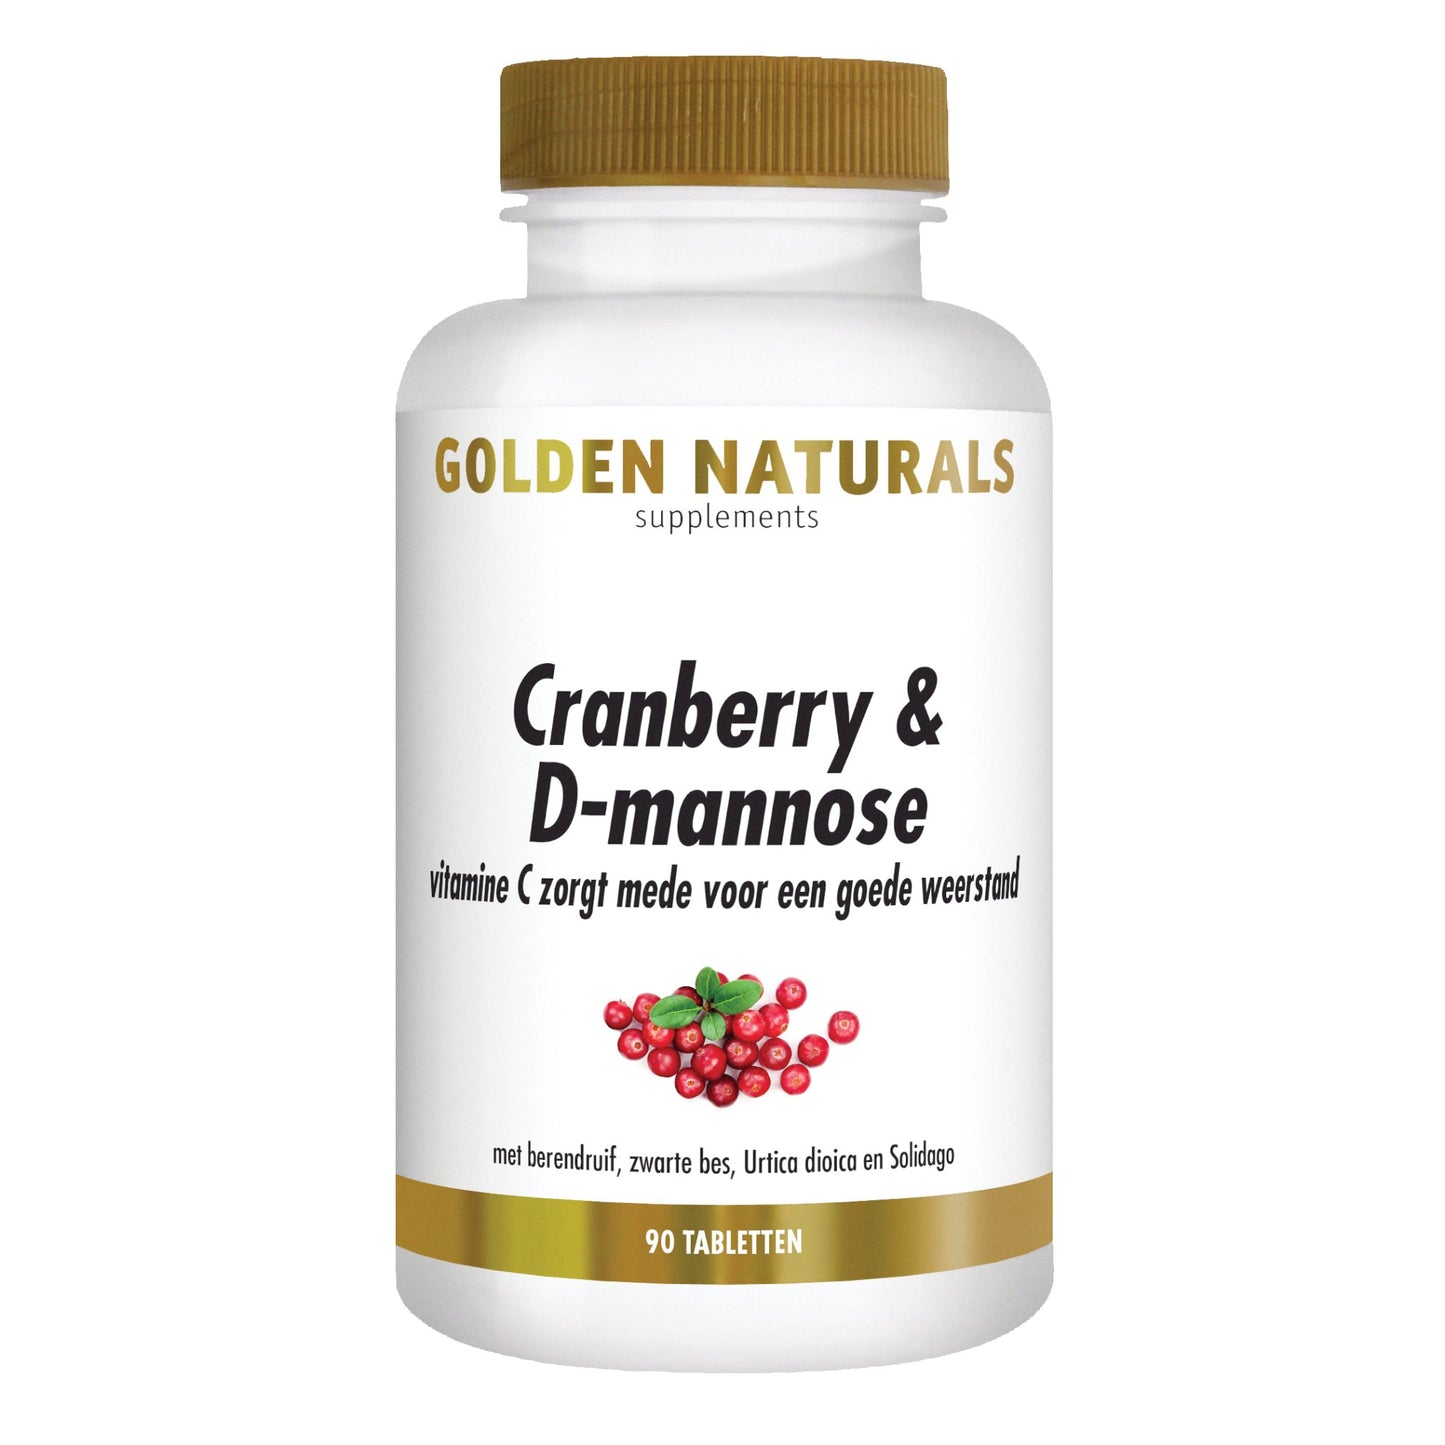 Cranberry & D-mannose - 90 - veganistische tabletten Supplement Golden Naturals   